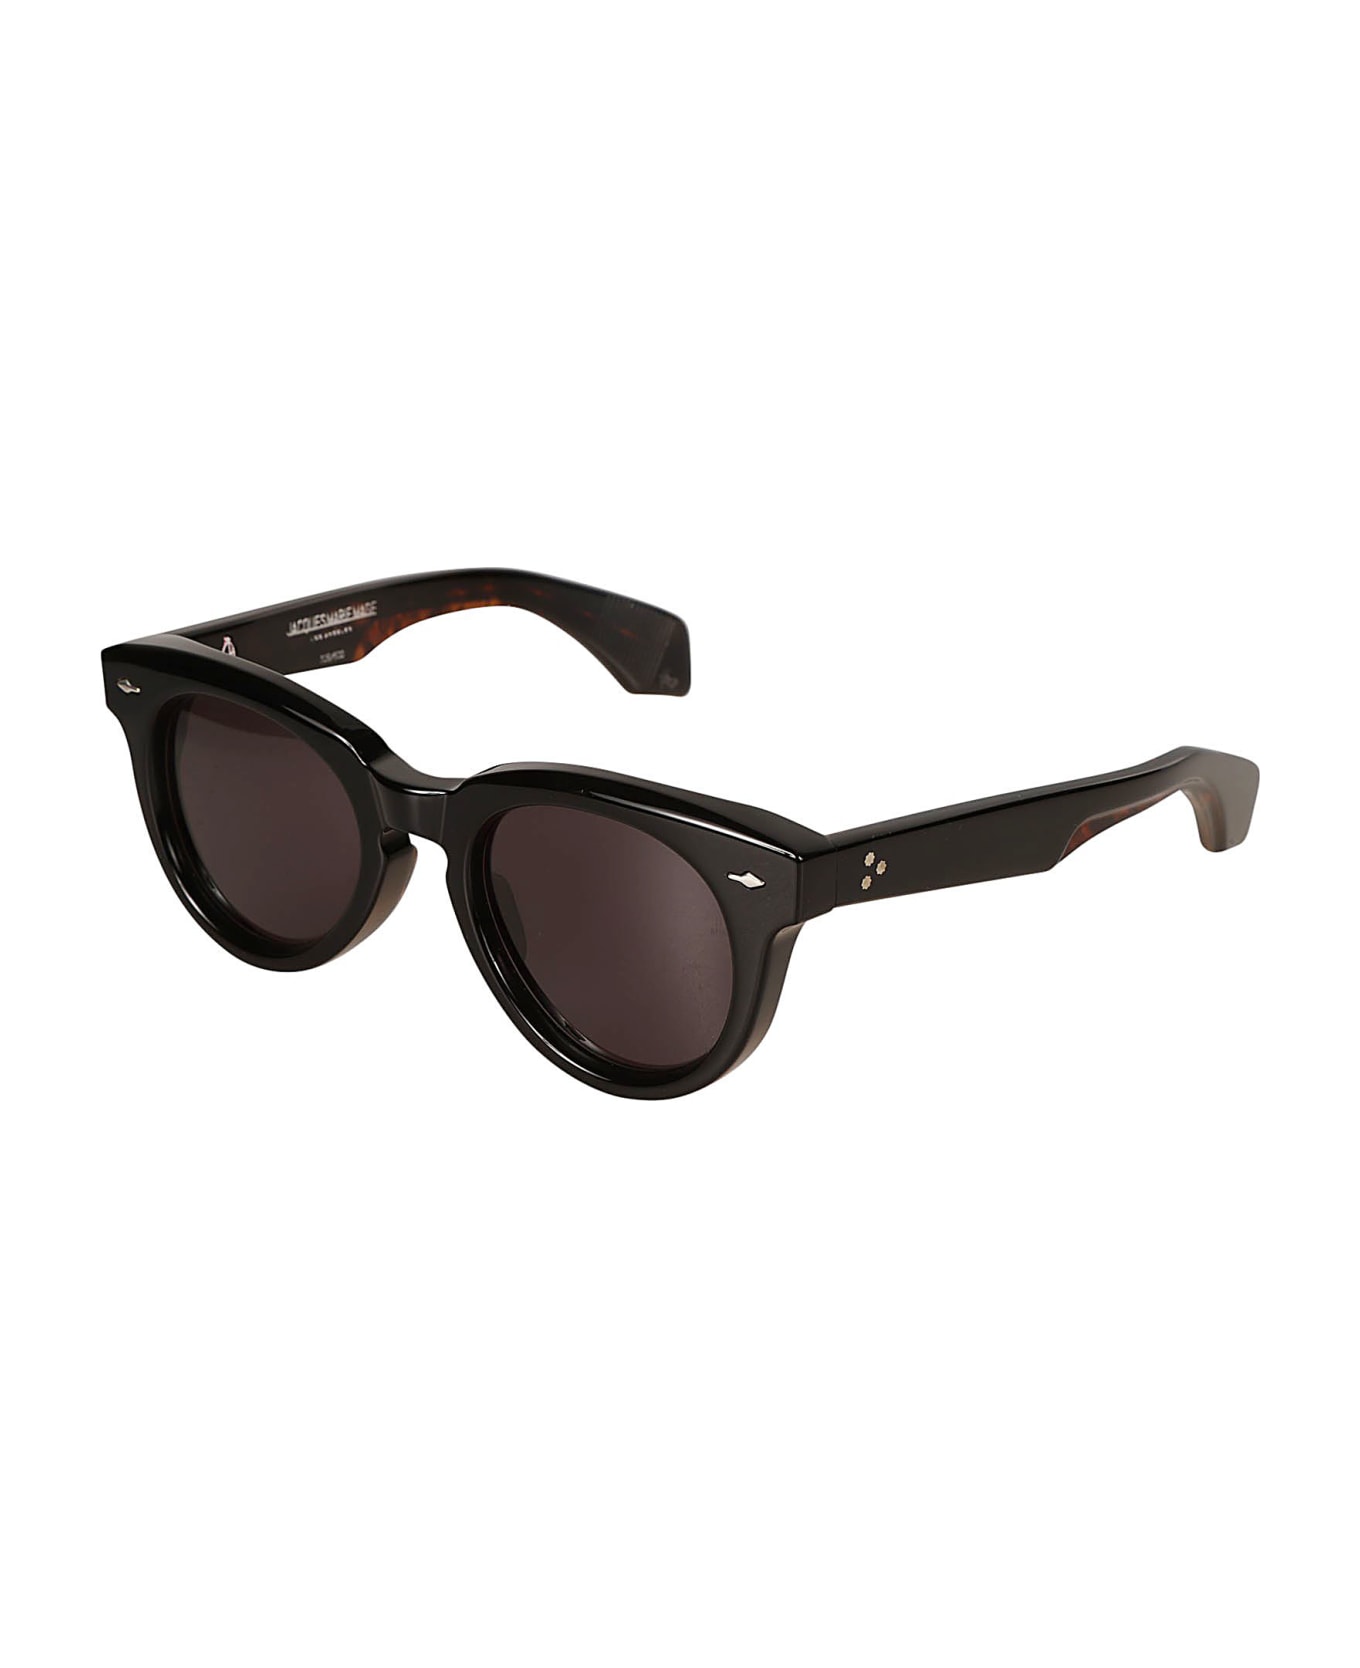 Jacques Marie Mage Fontaine Sunglasses Sunglasses - Black